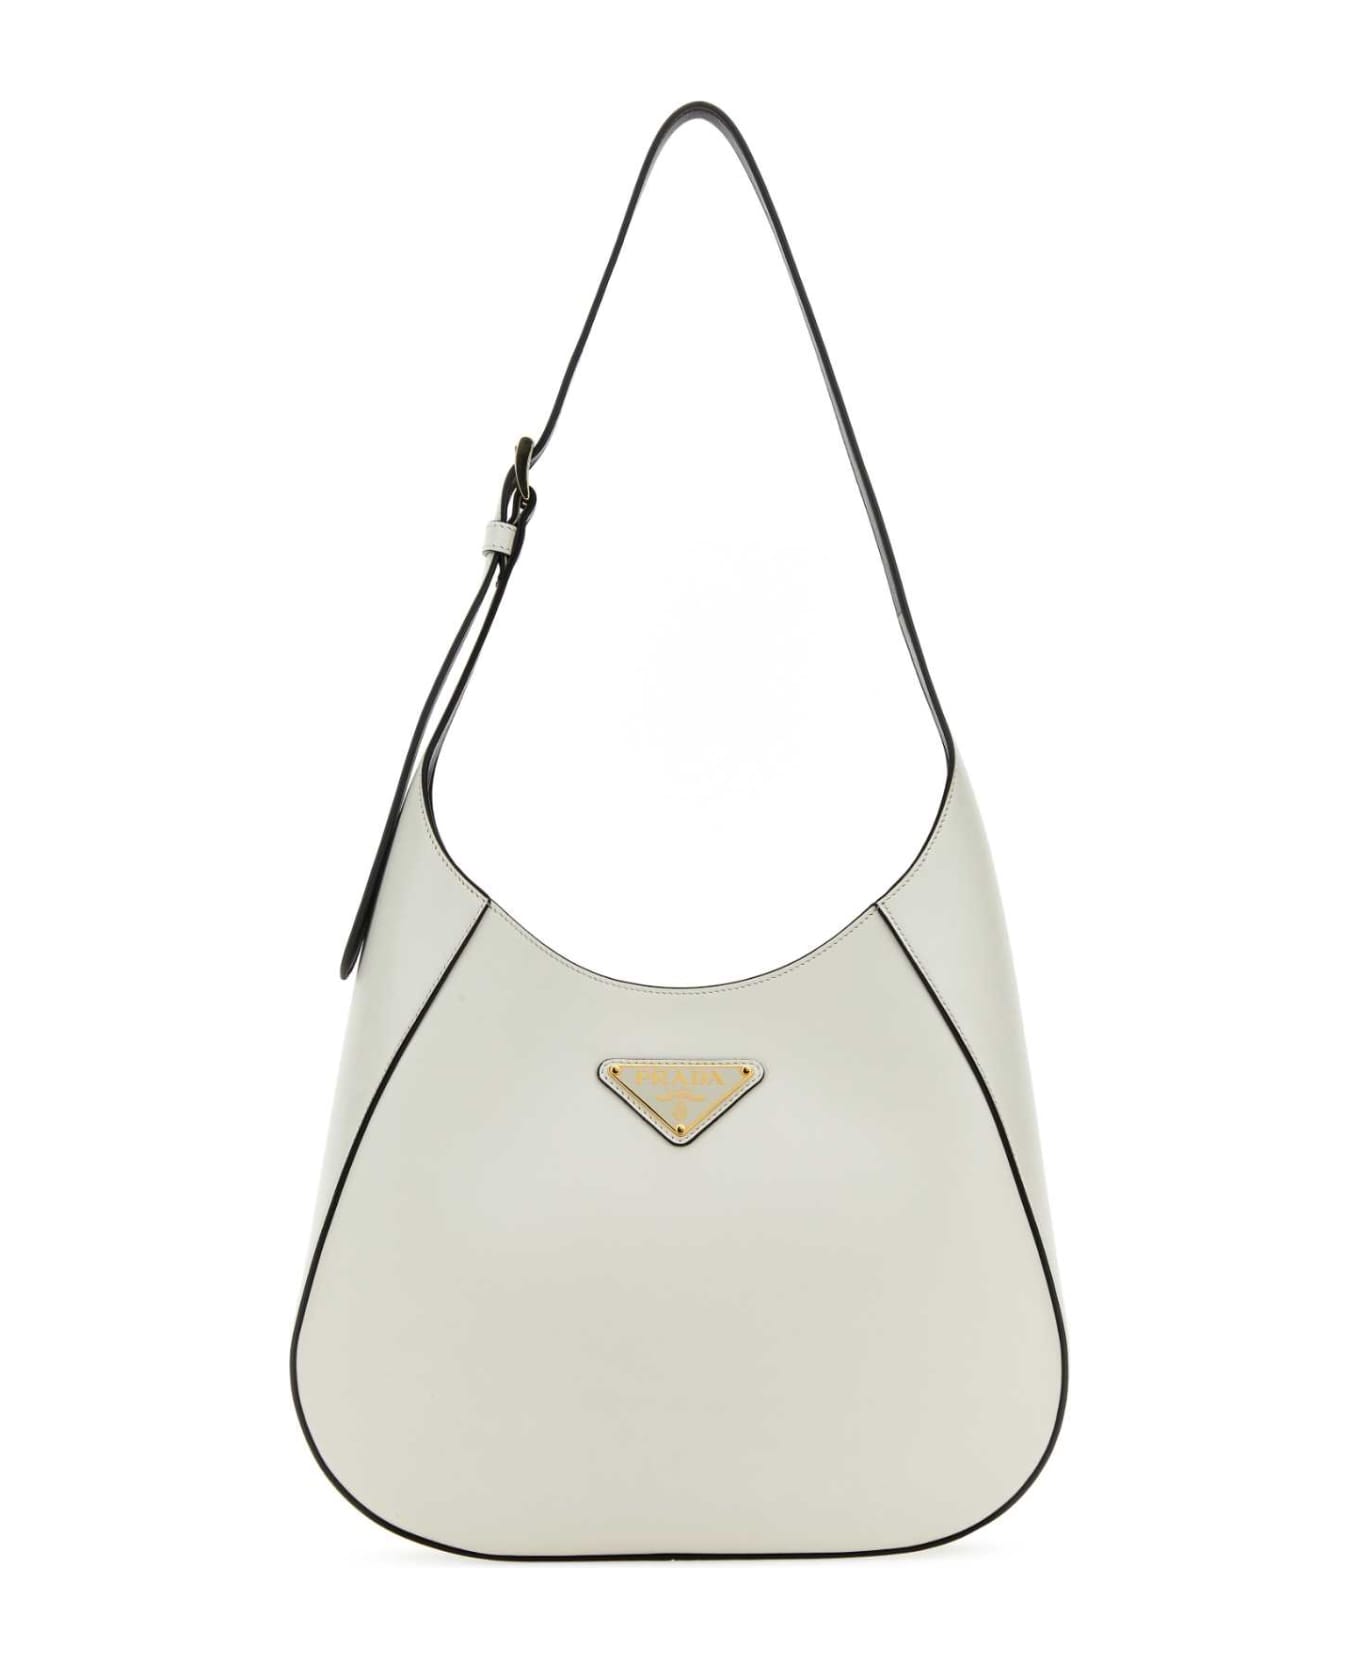 Prada White Leather Shoulder Bag - BIANCONERO トートバッグ